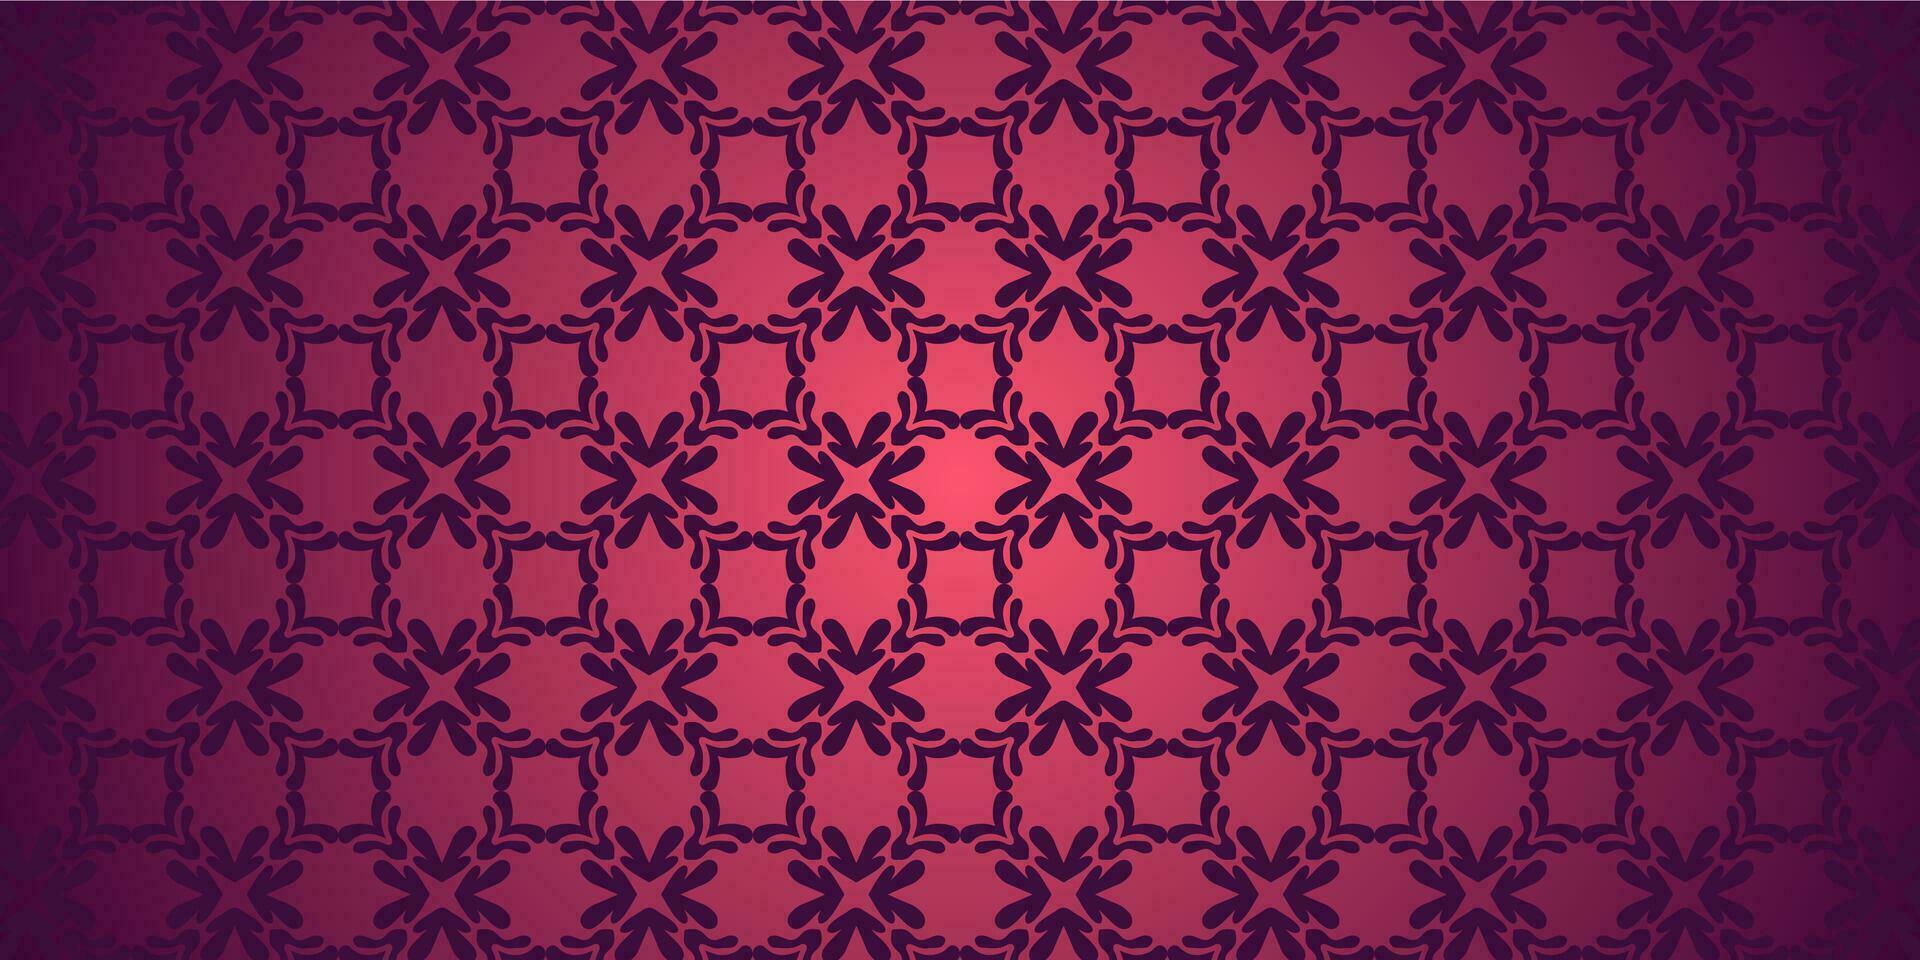 Arabic motif purple background vector